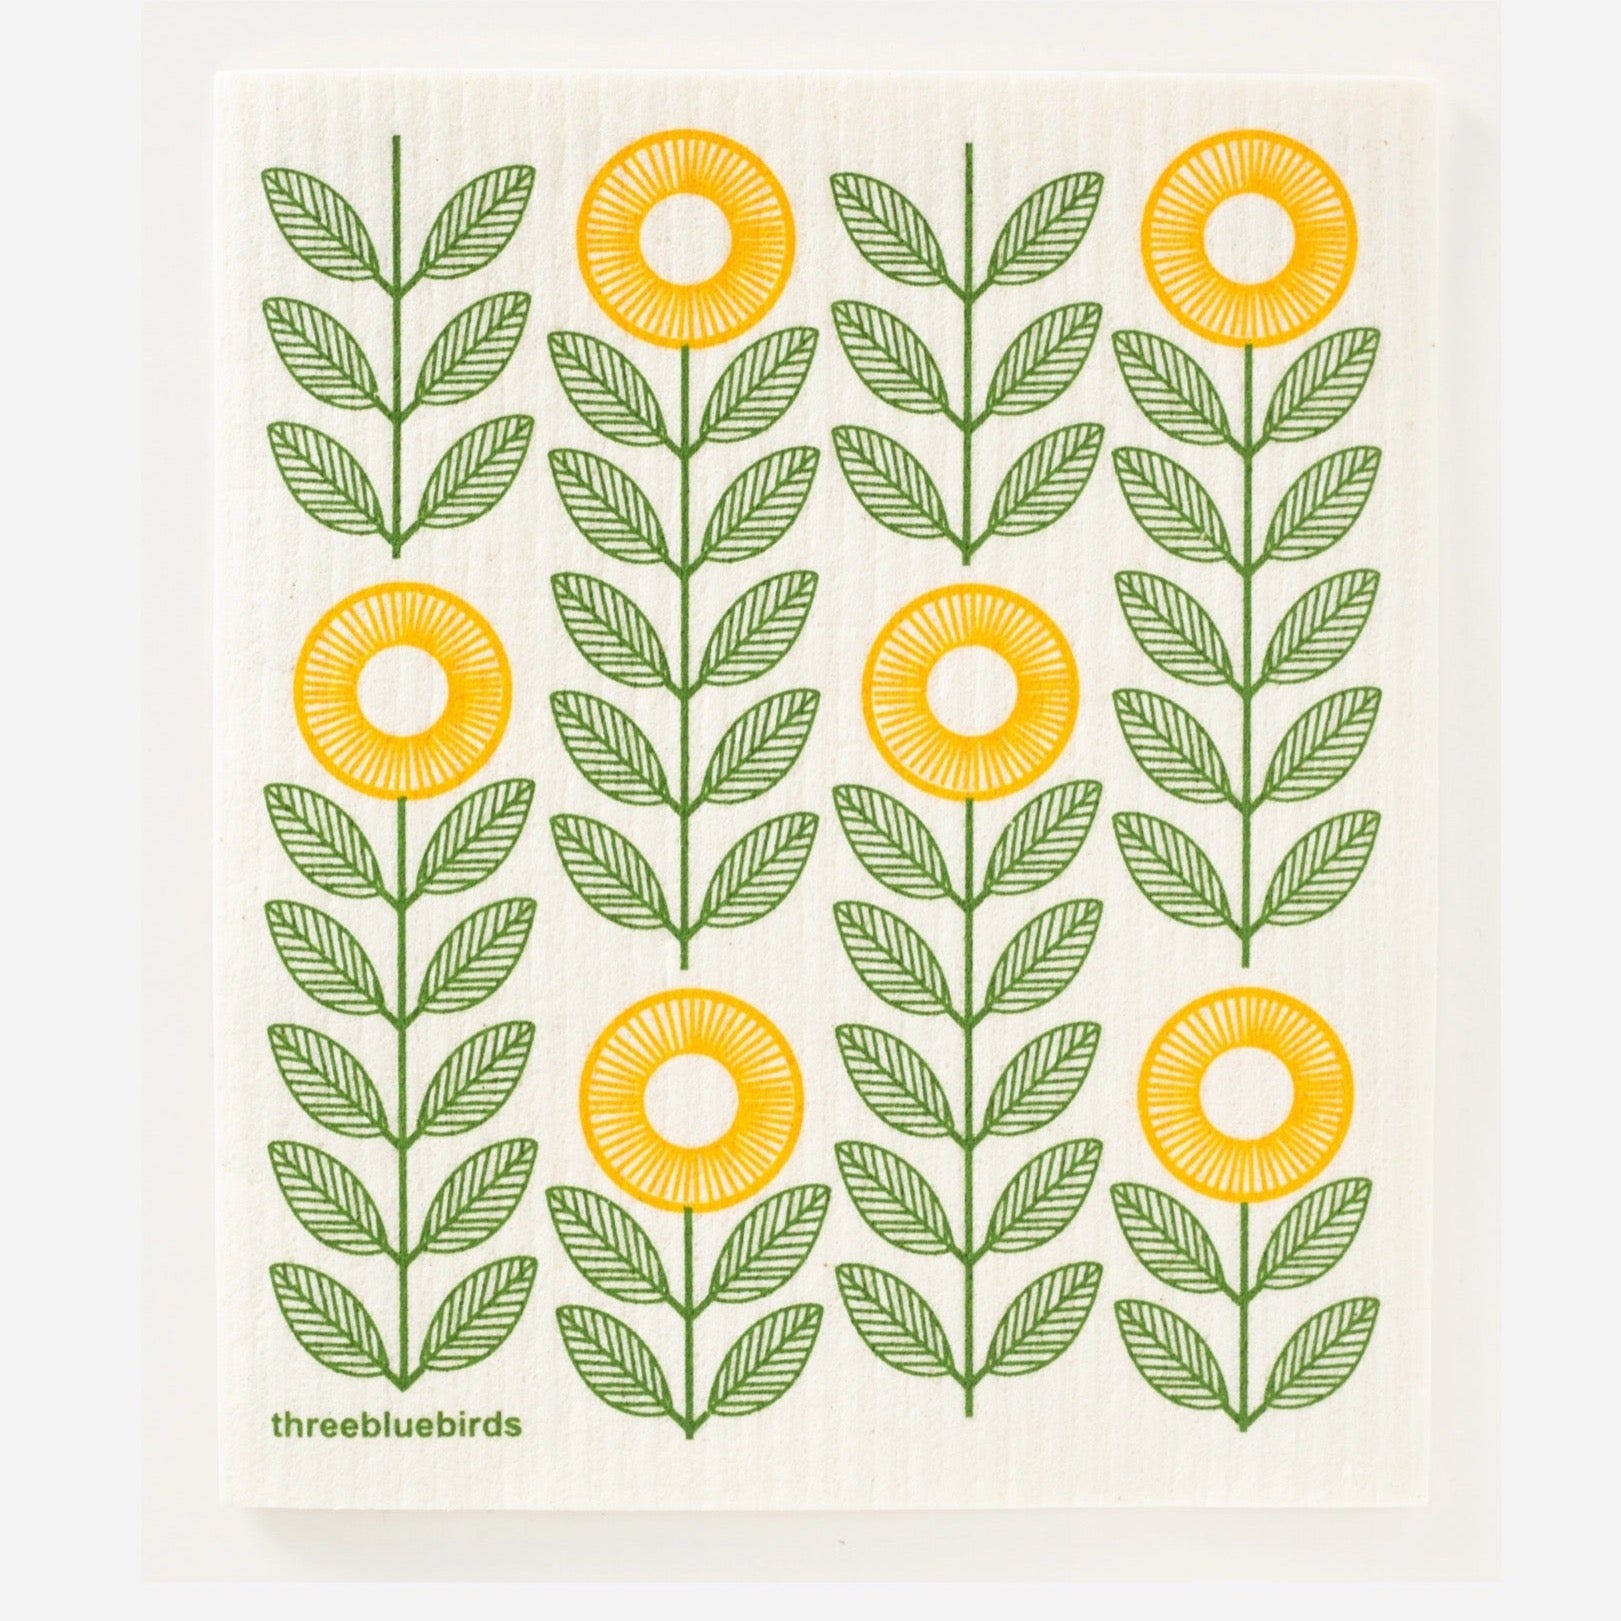 swedish dishcloth with yellow sunflowers printed on it. sunflowers have green leaves printed on it